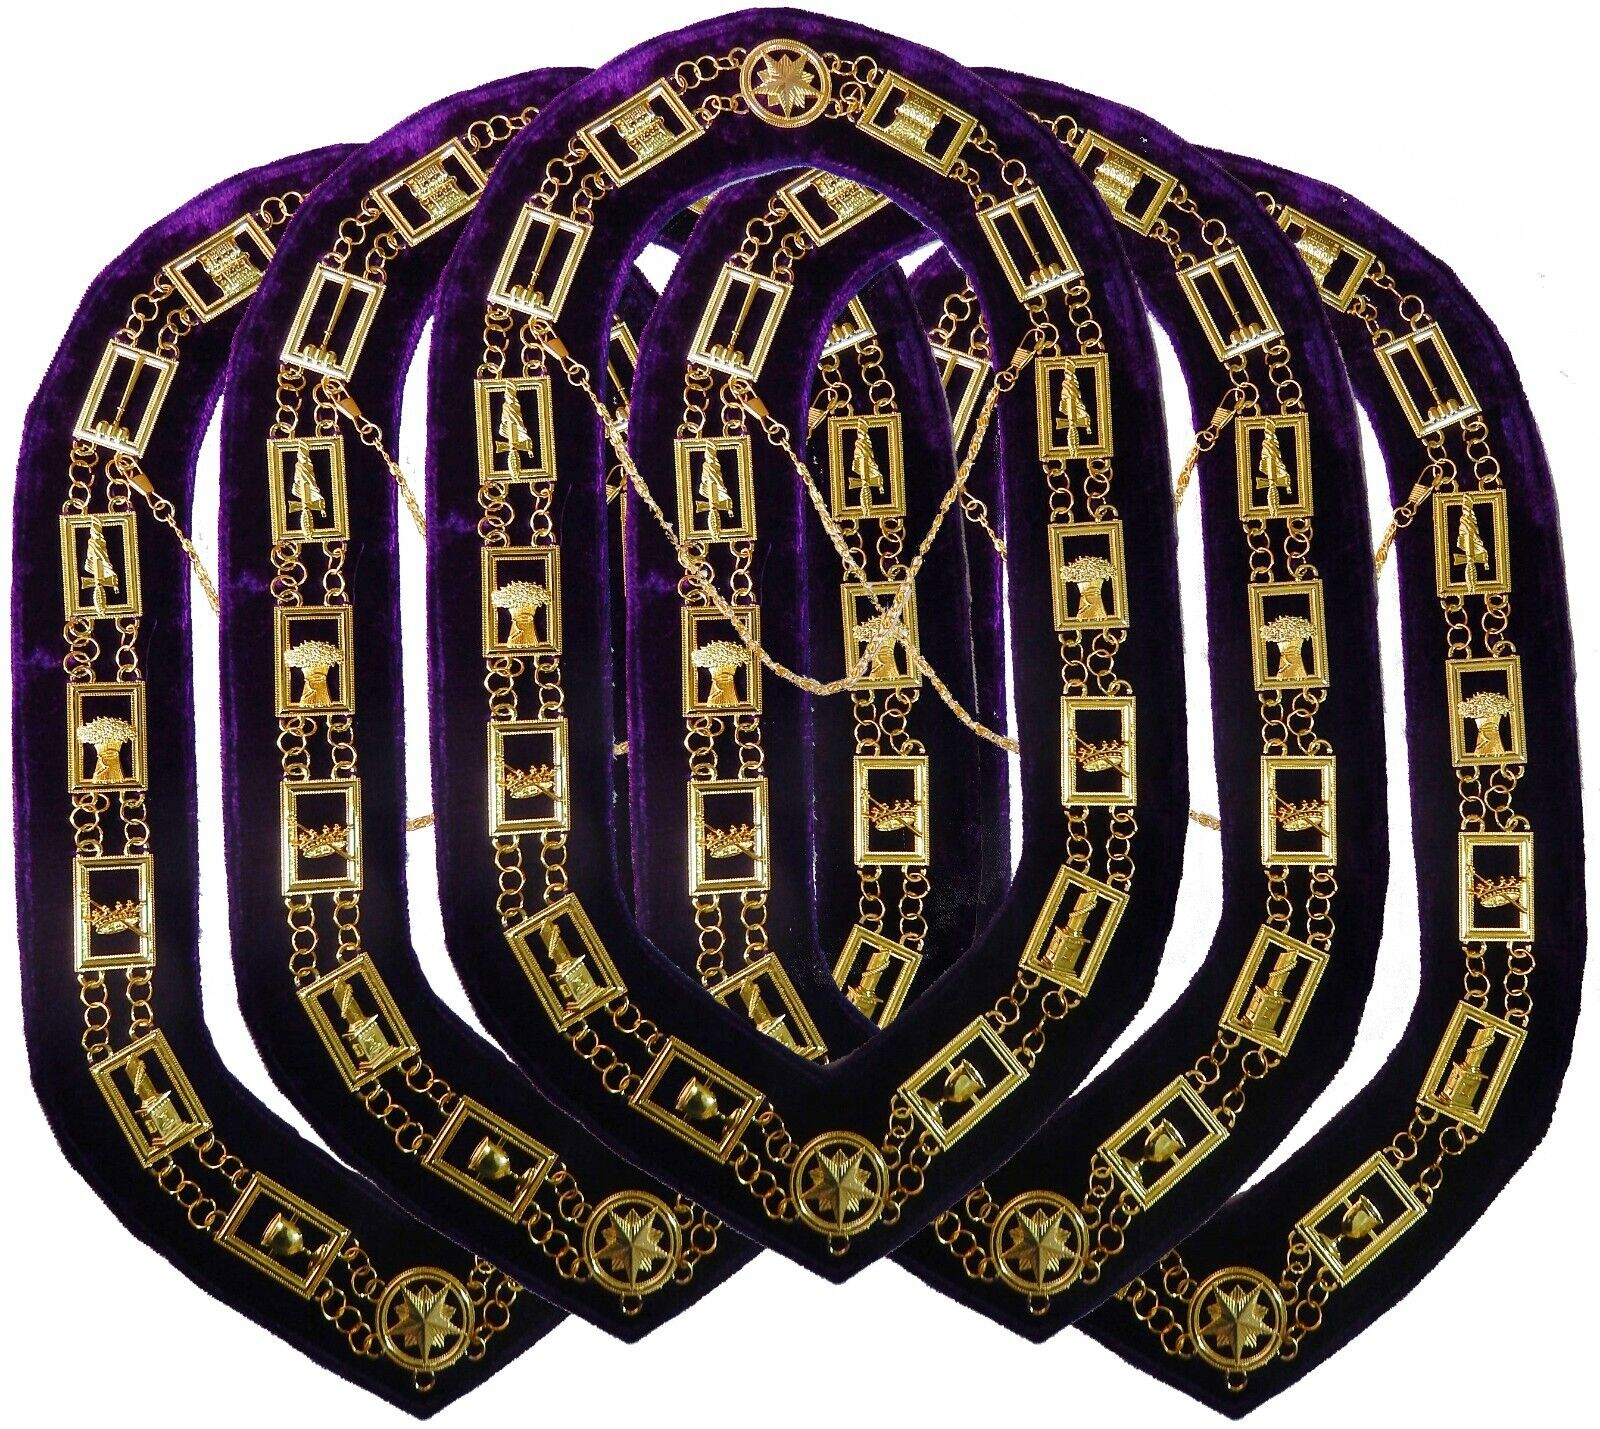 Masonic Regalia O.E.S. Order of Eastern Star Gold Metal Chain Collar - Lot of 5